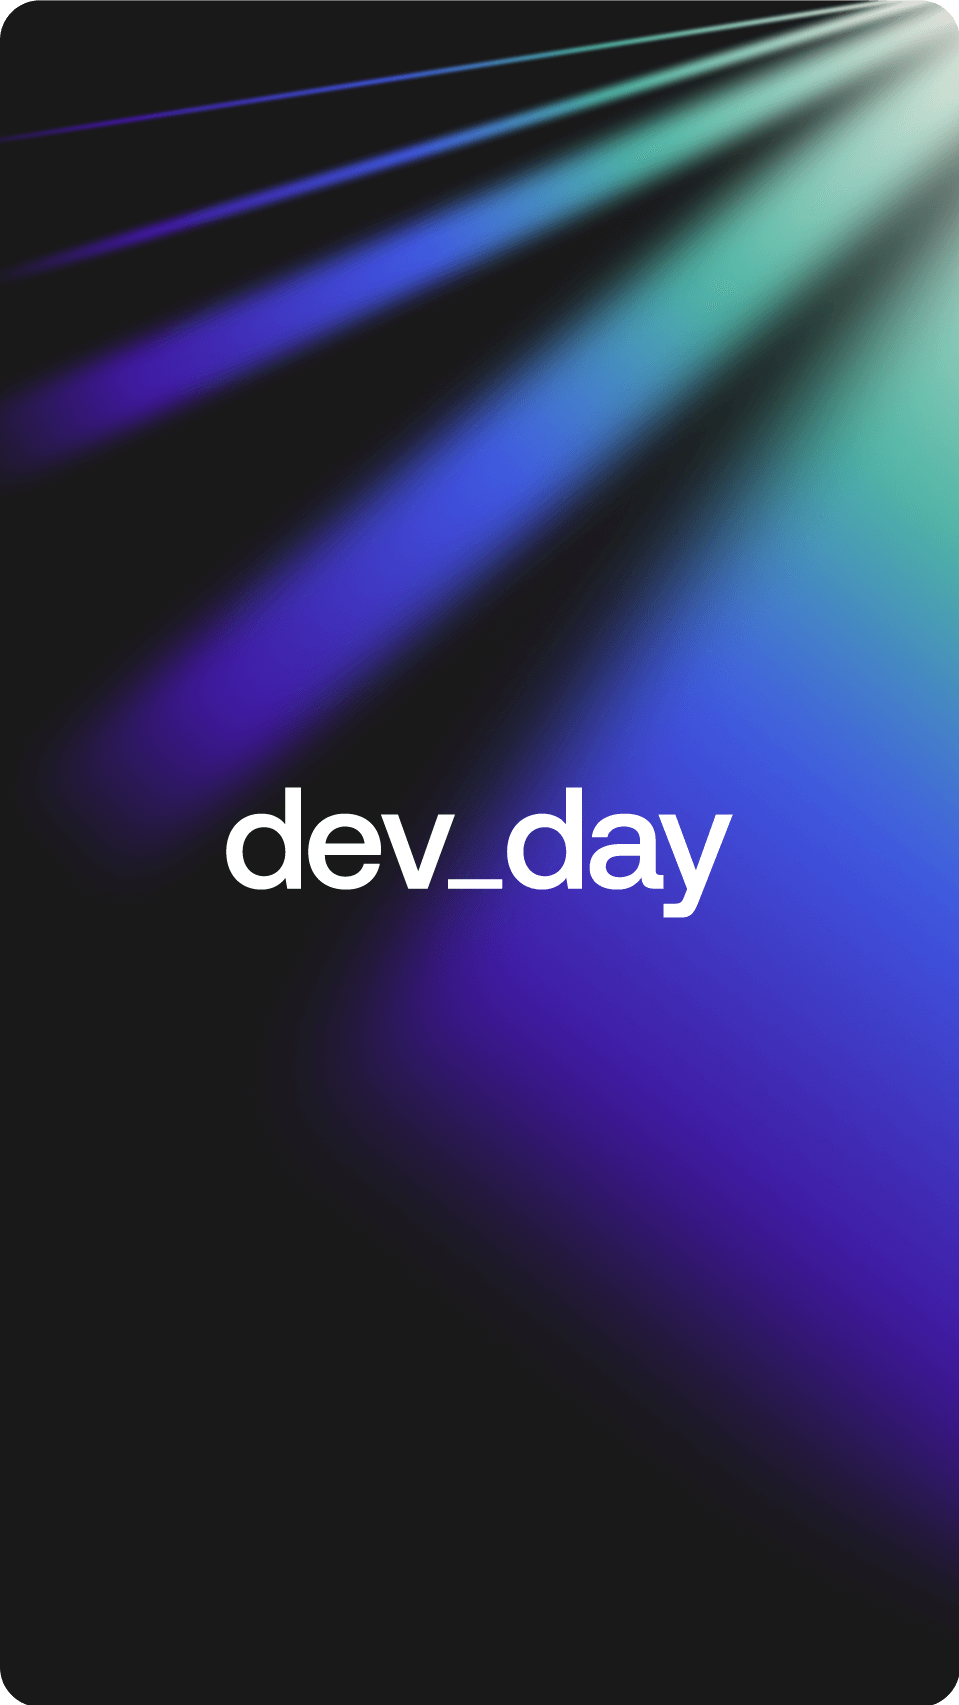 DevDay23 logo with pixelated graffiti